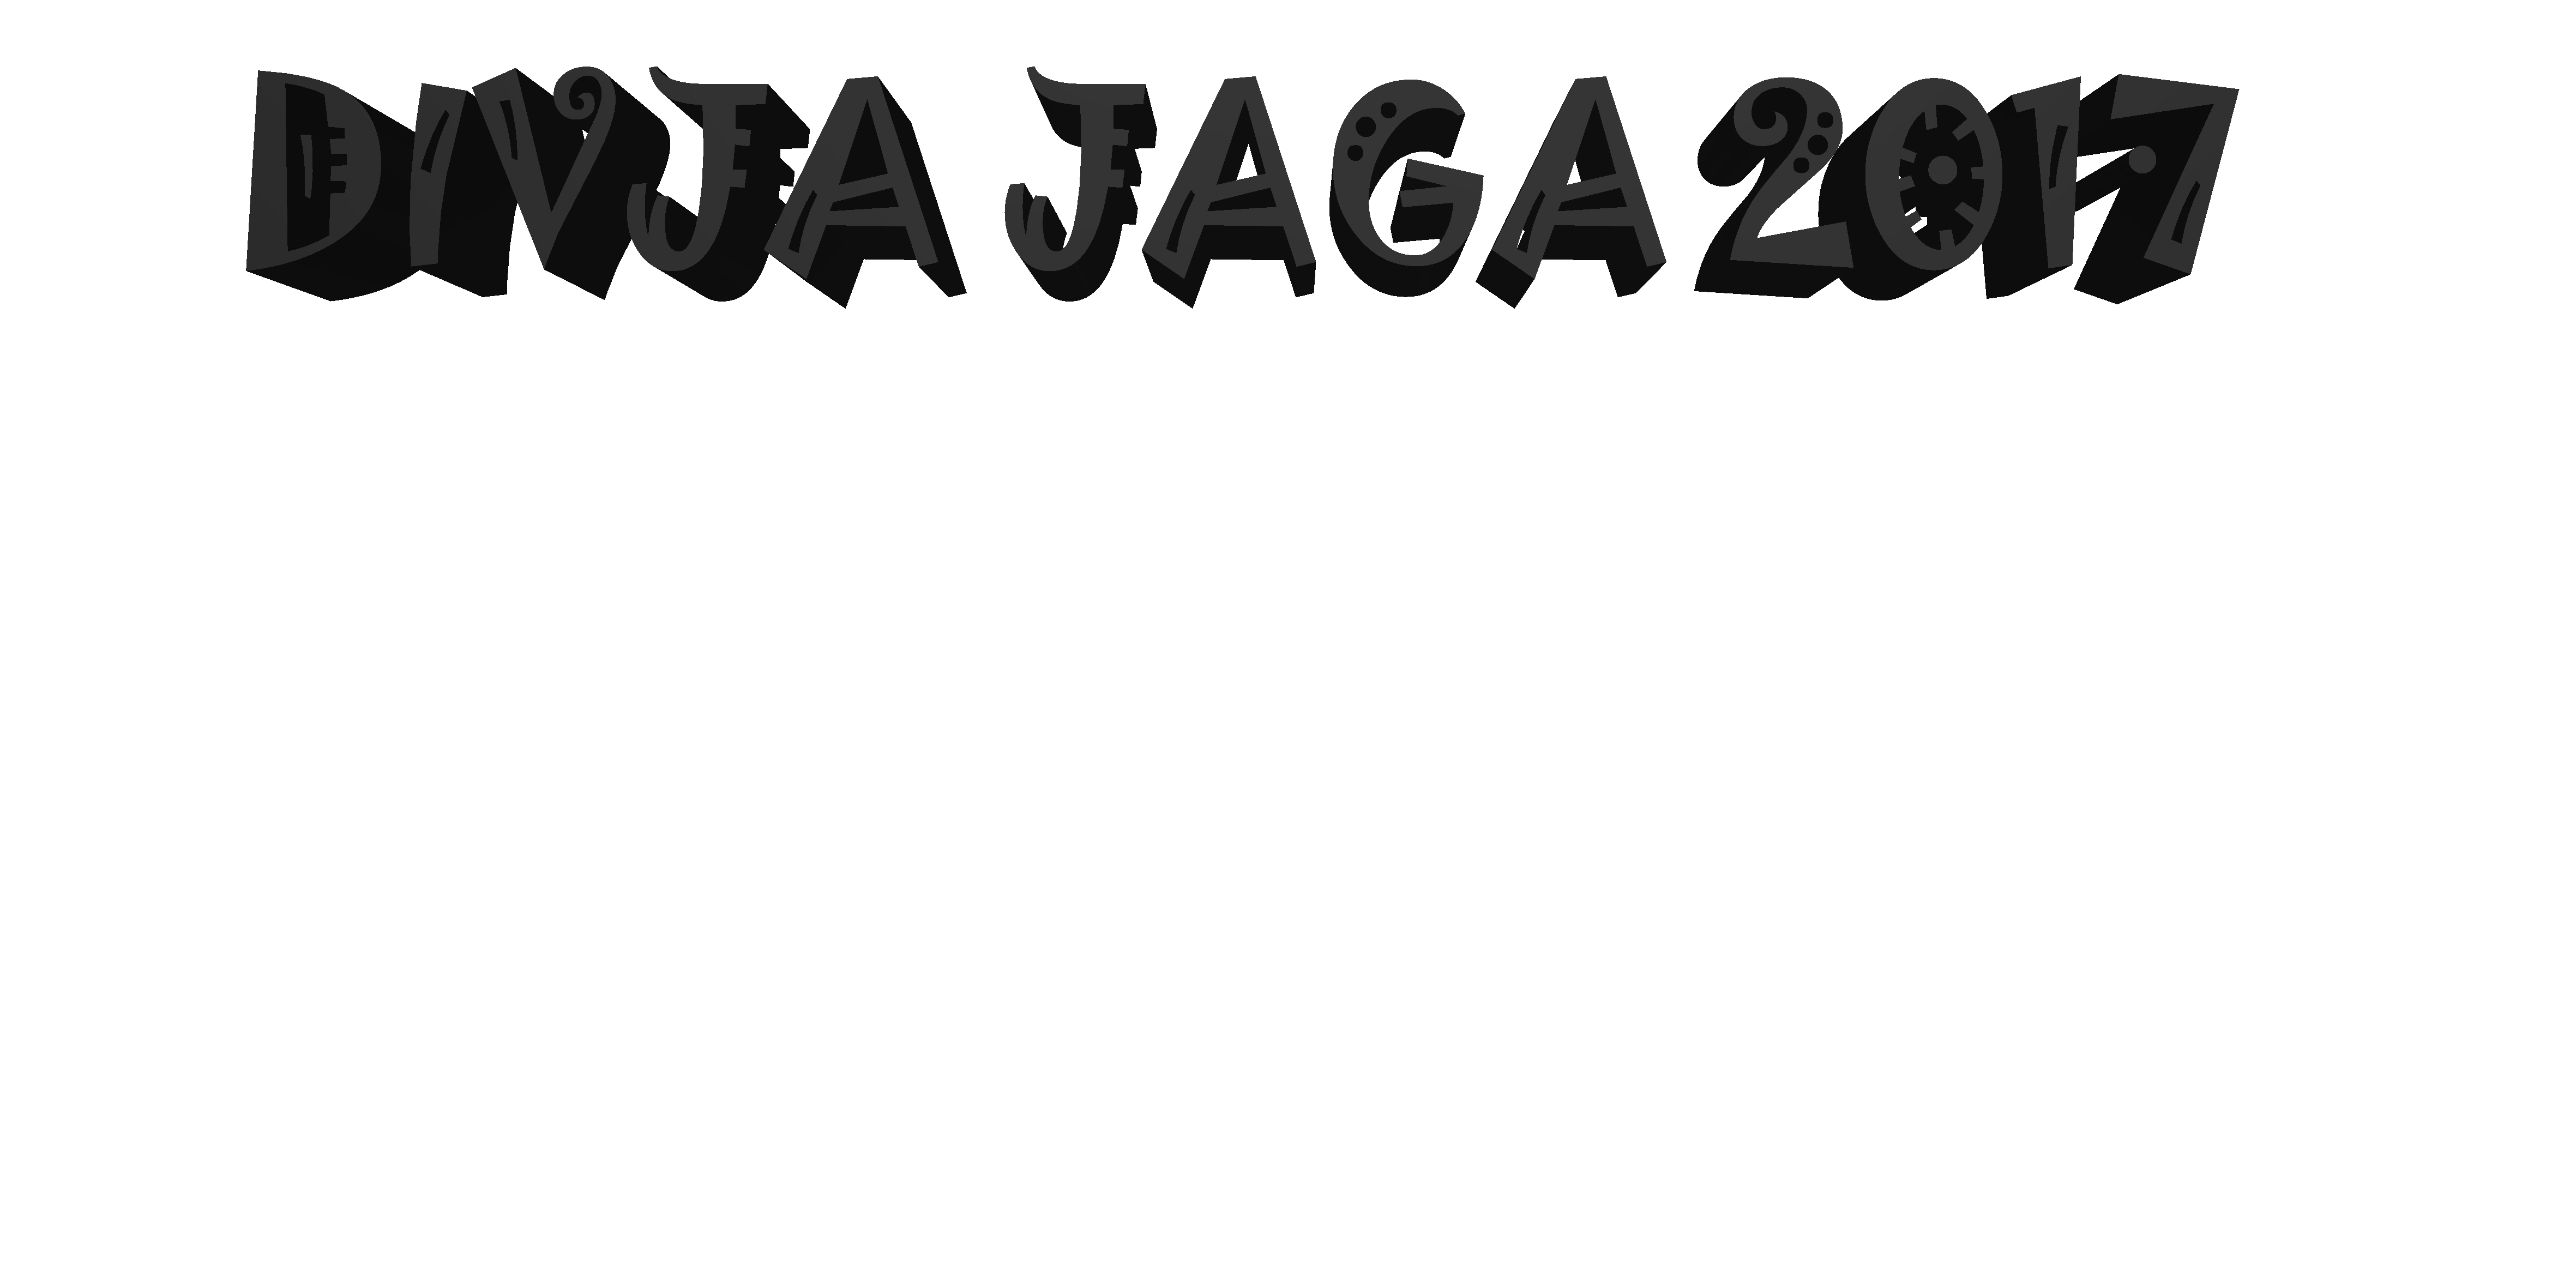 Divja jaga 2017 (začasno)